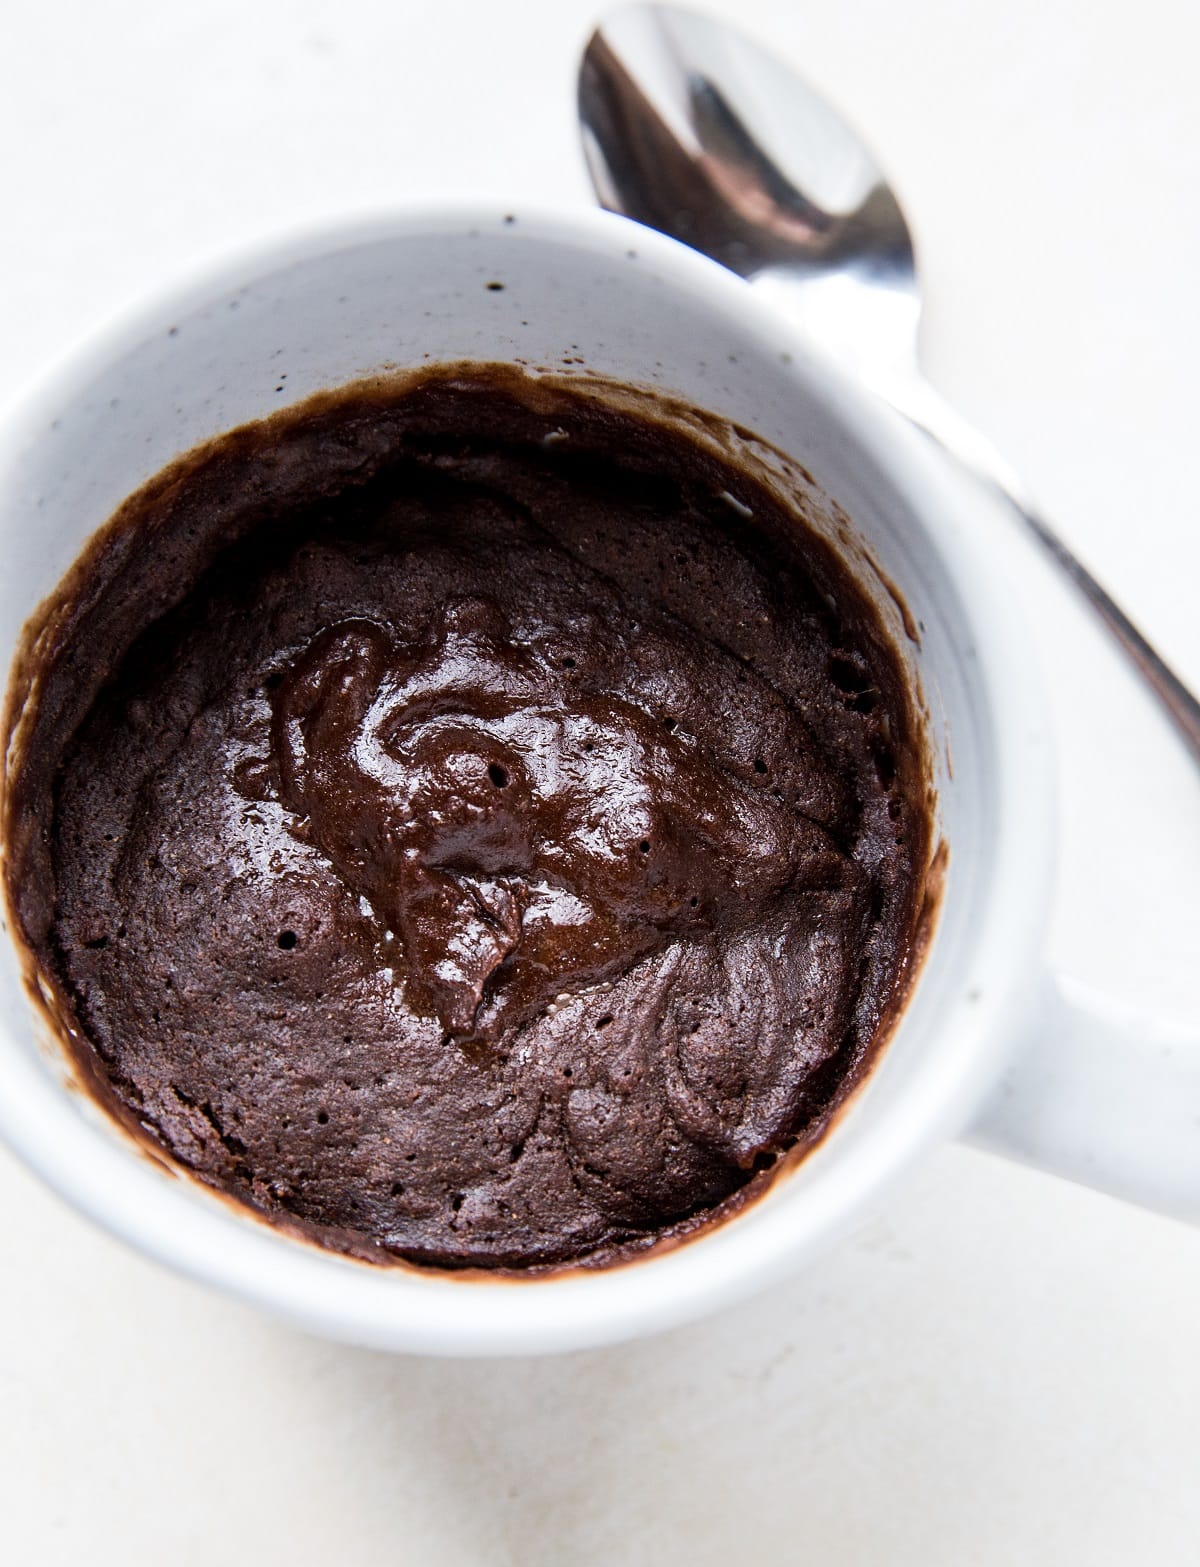 Dairy-Free Vegan Gluten-Free Mug Brownie - a single-serve dessert recipe requiring only 4 ingredients